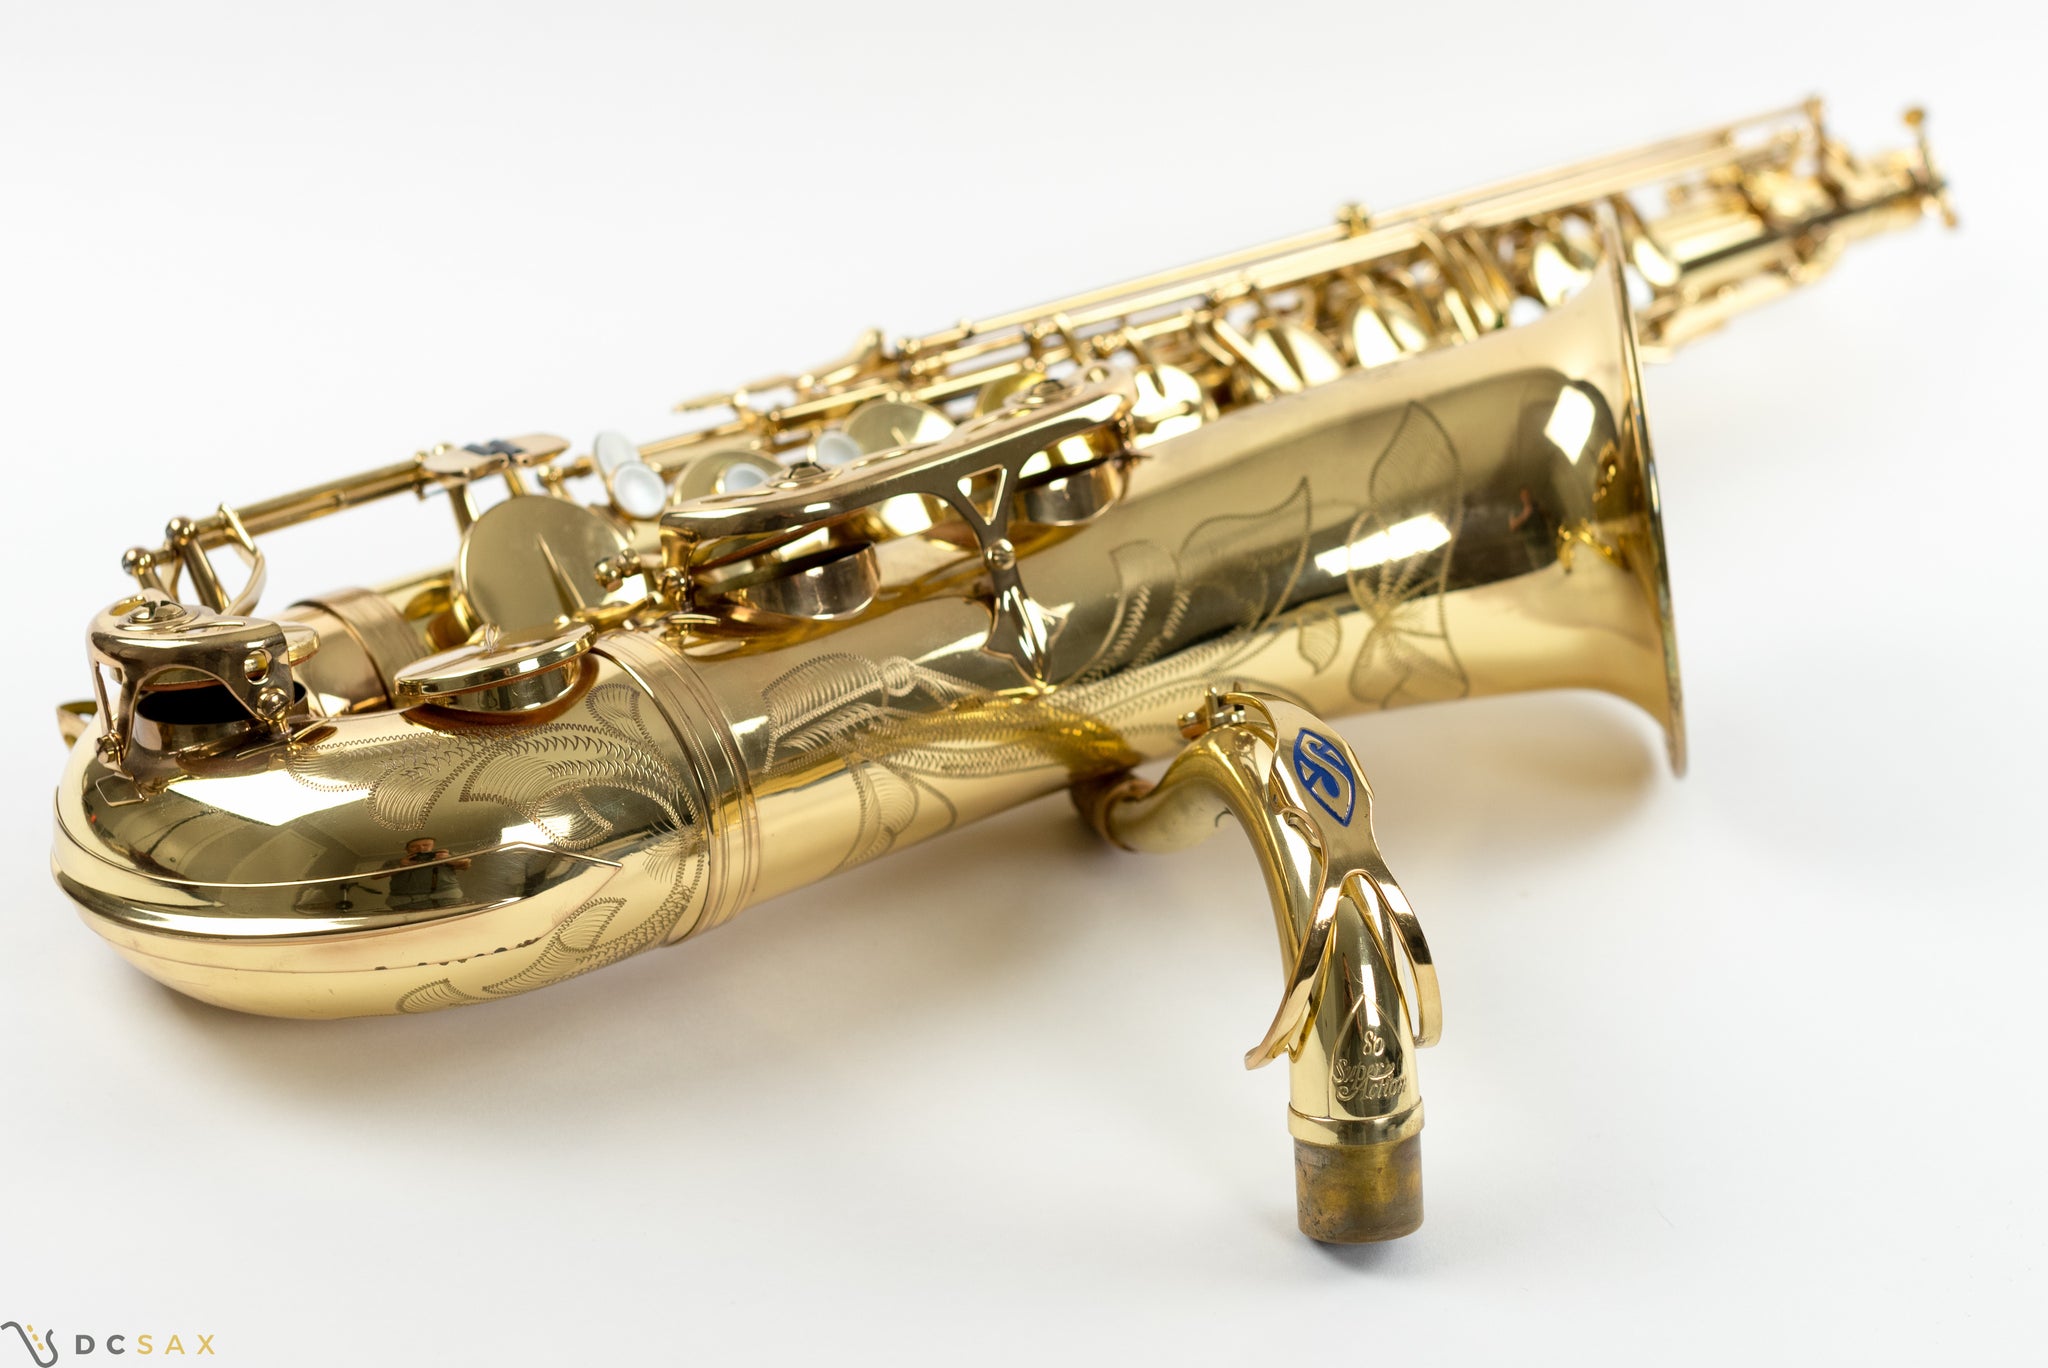 Selmer Super Action 80 Tenor Saxophone